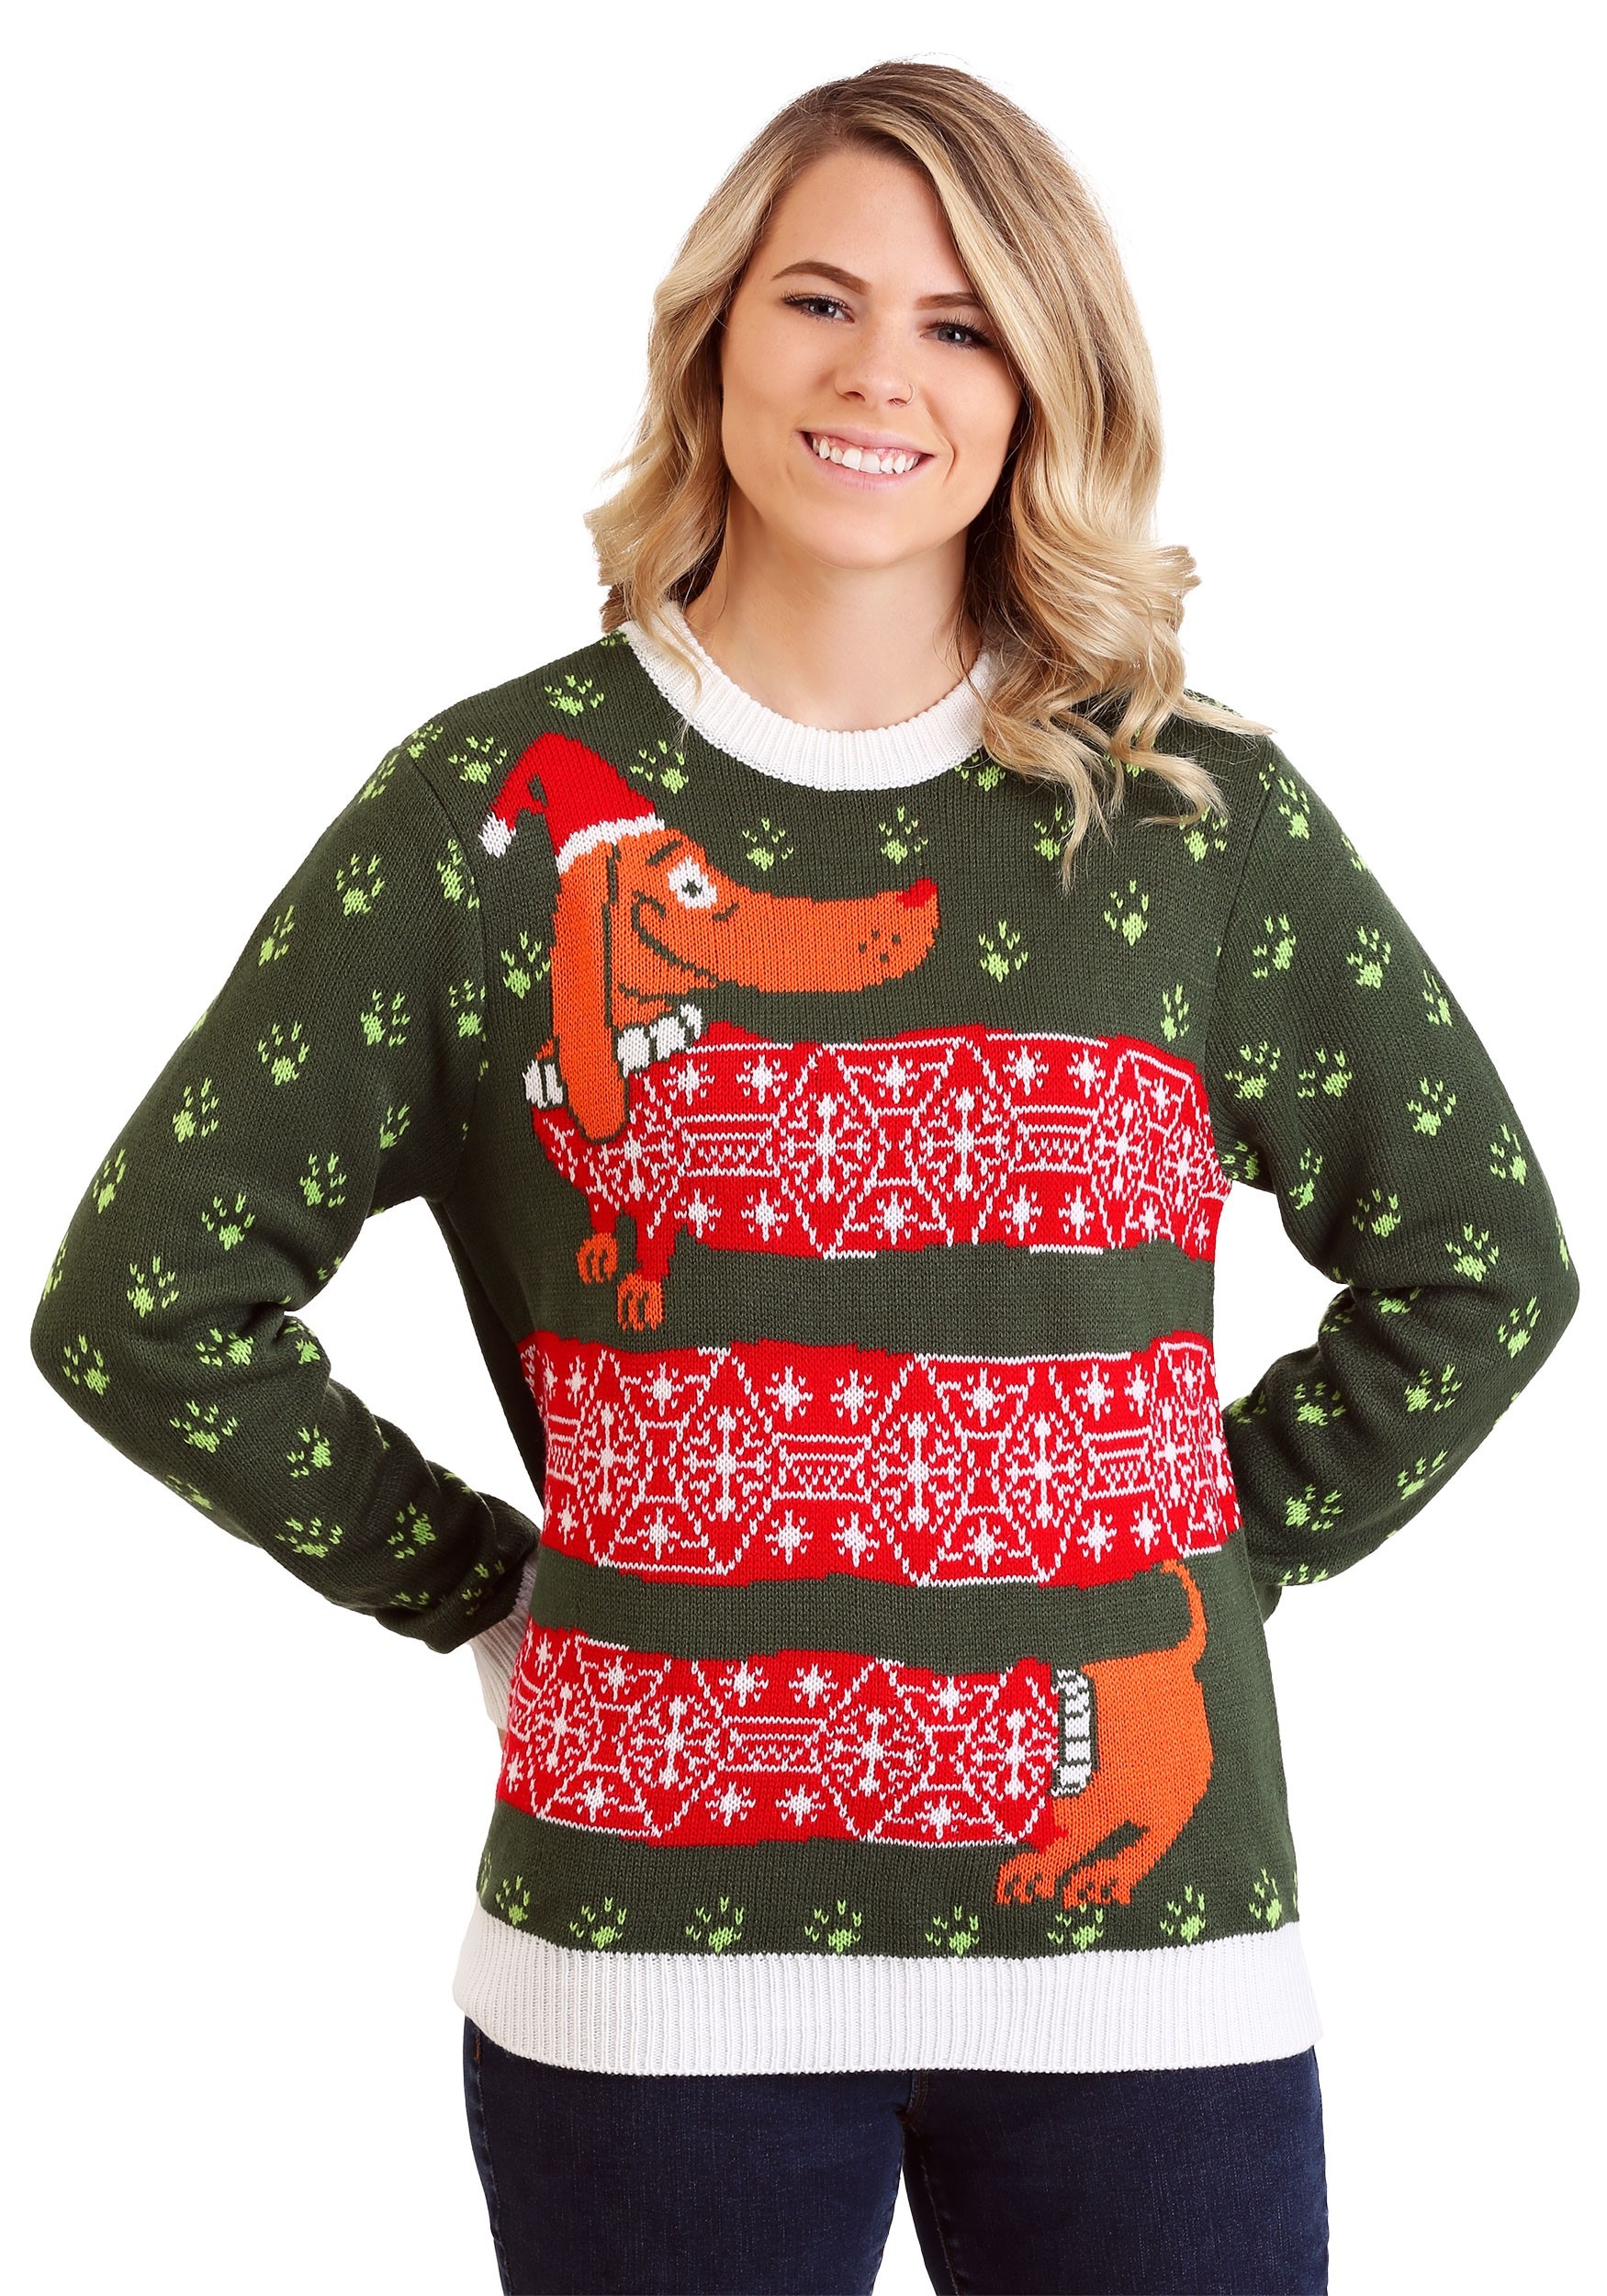 Freddy Krueger Ugly Christmas Sweater Shop Clearance, Save 69% | jlcatj ...